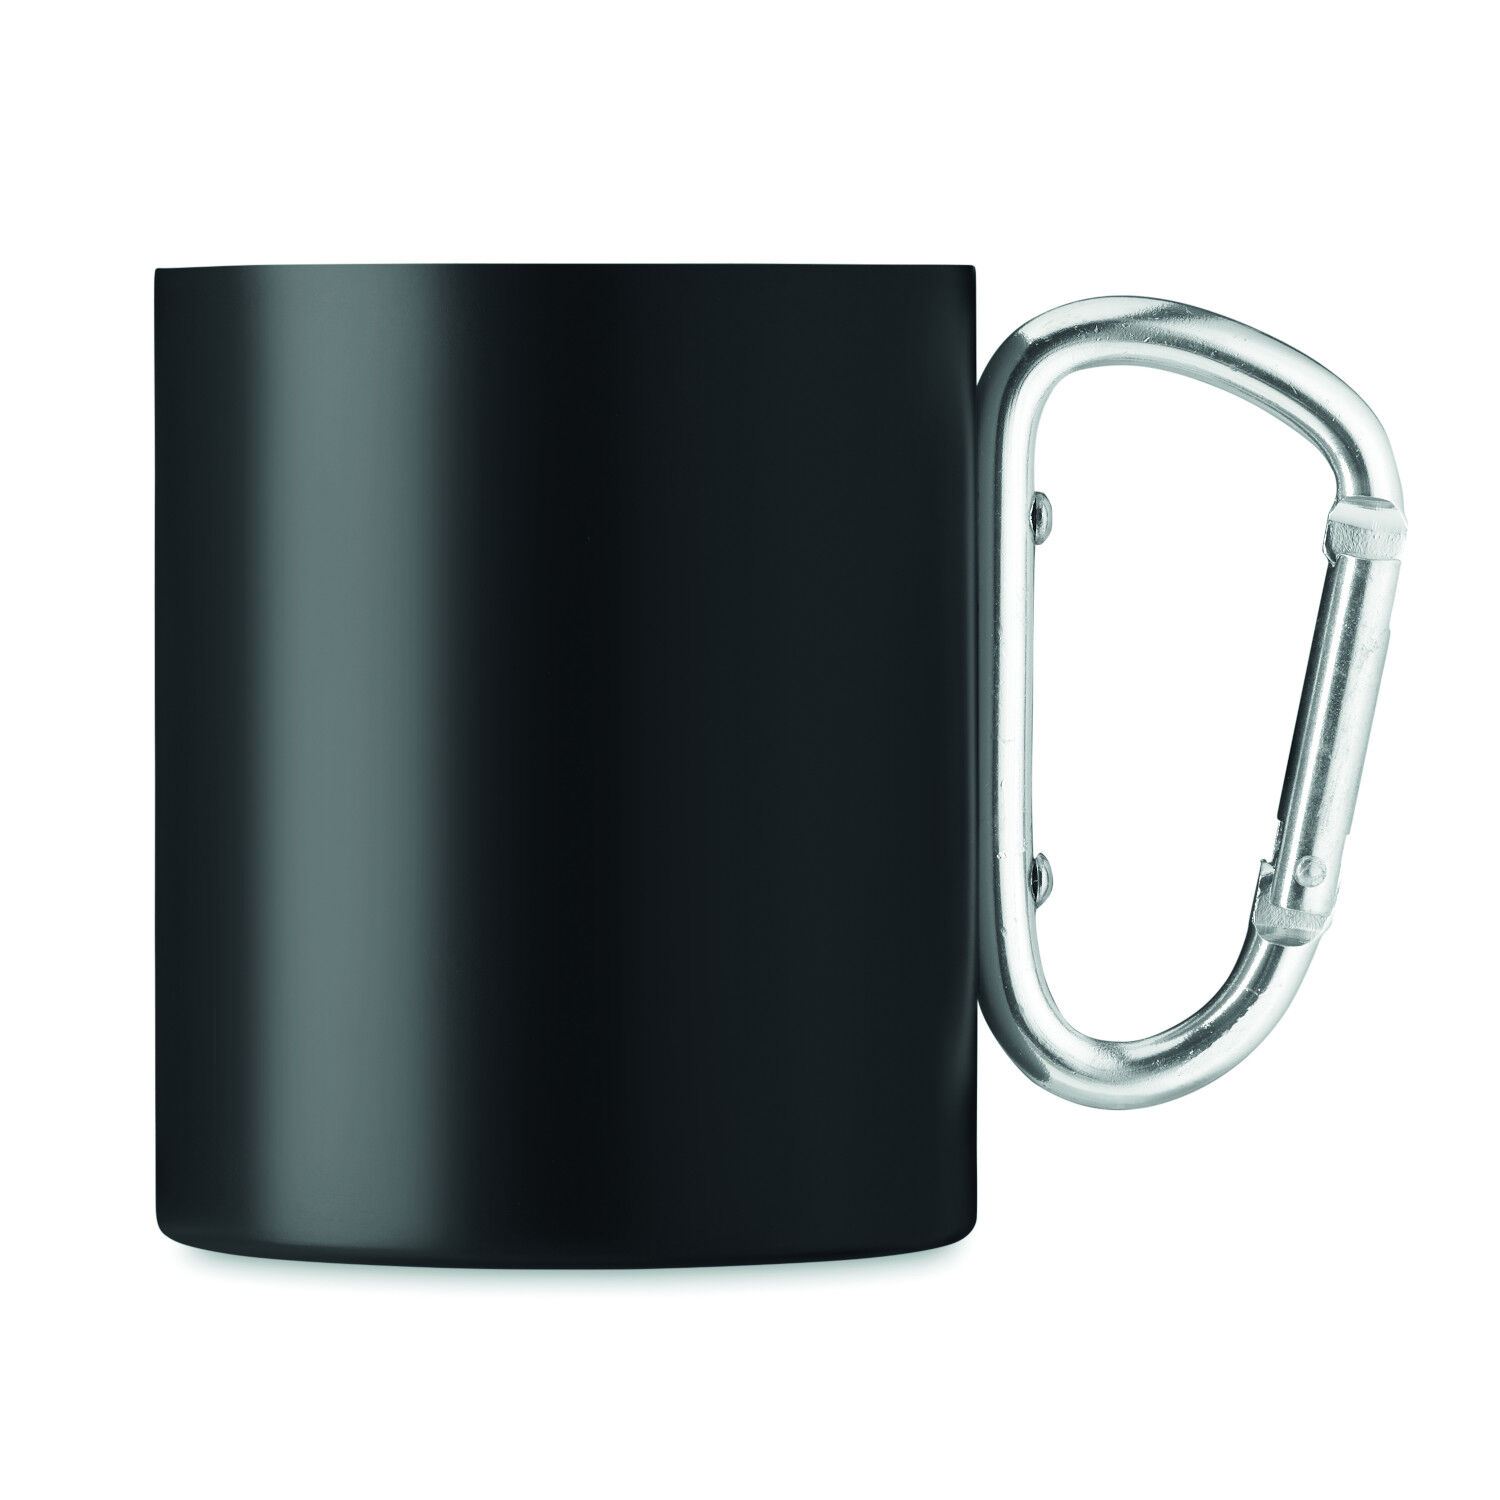   Steel Insulated Mug with Carabiner Handle (black)